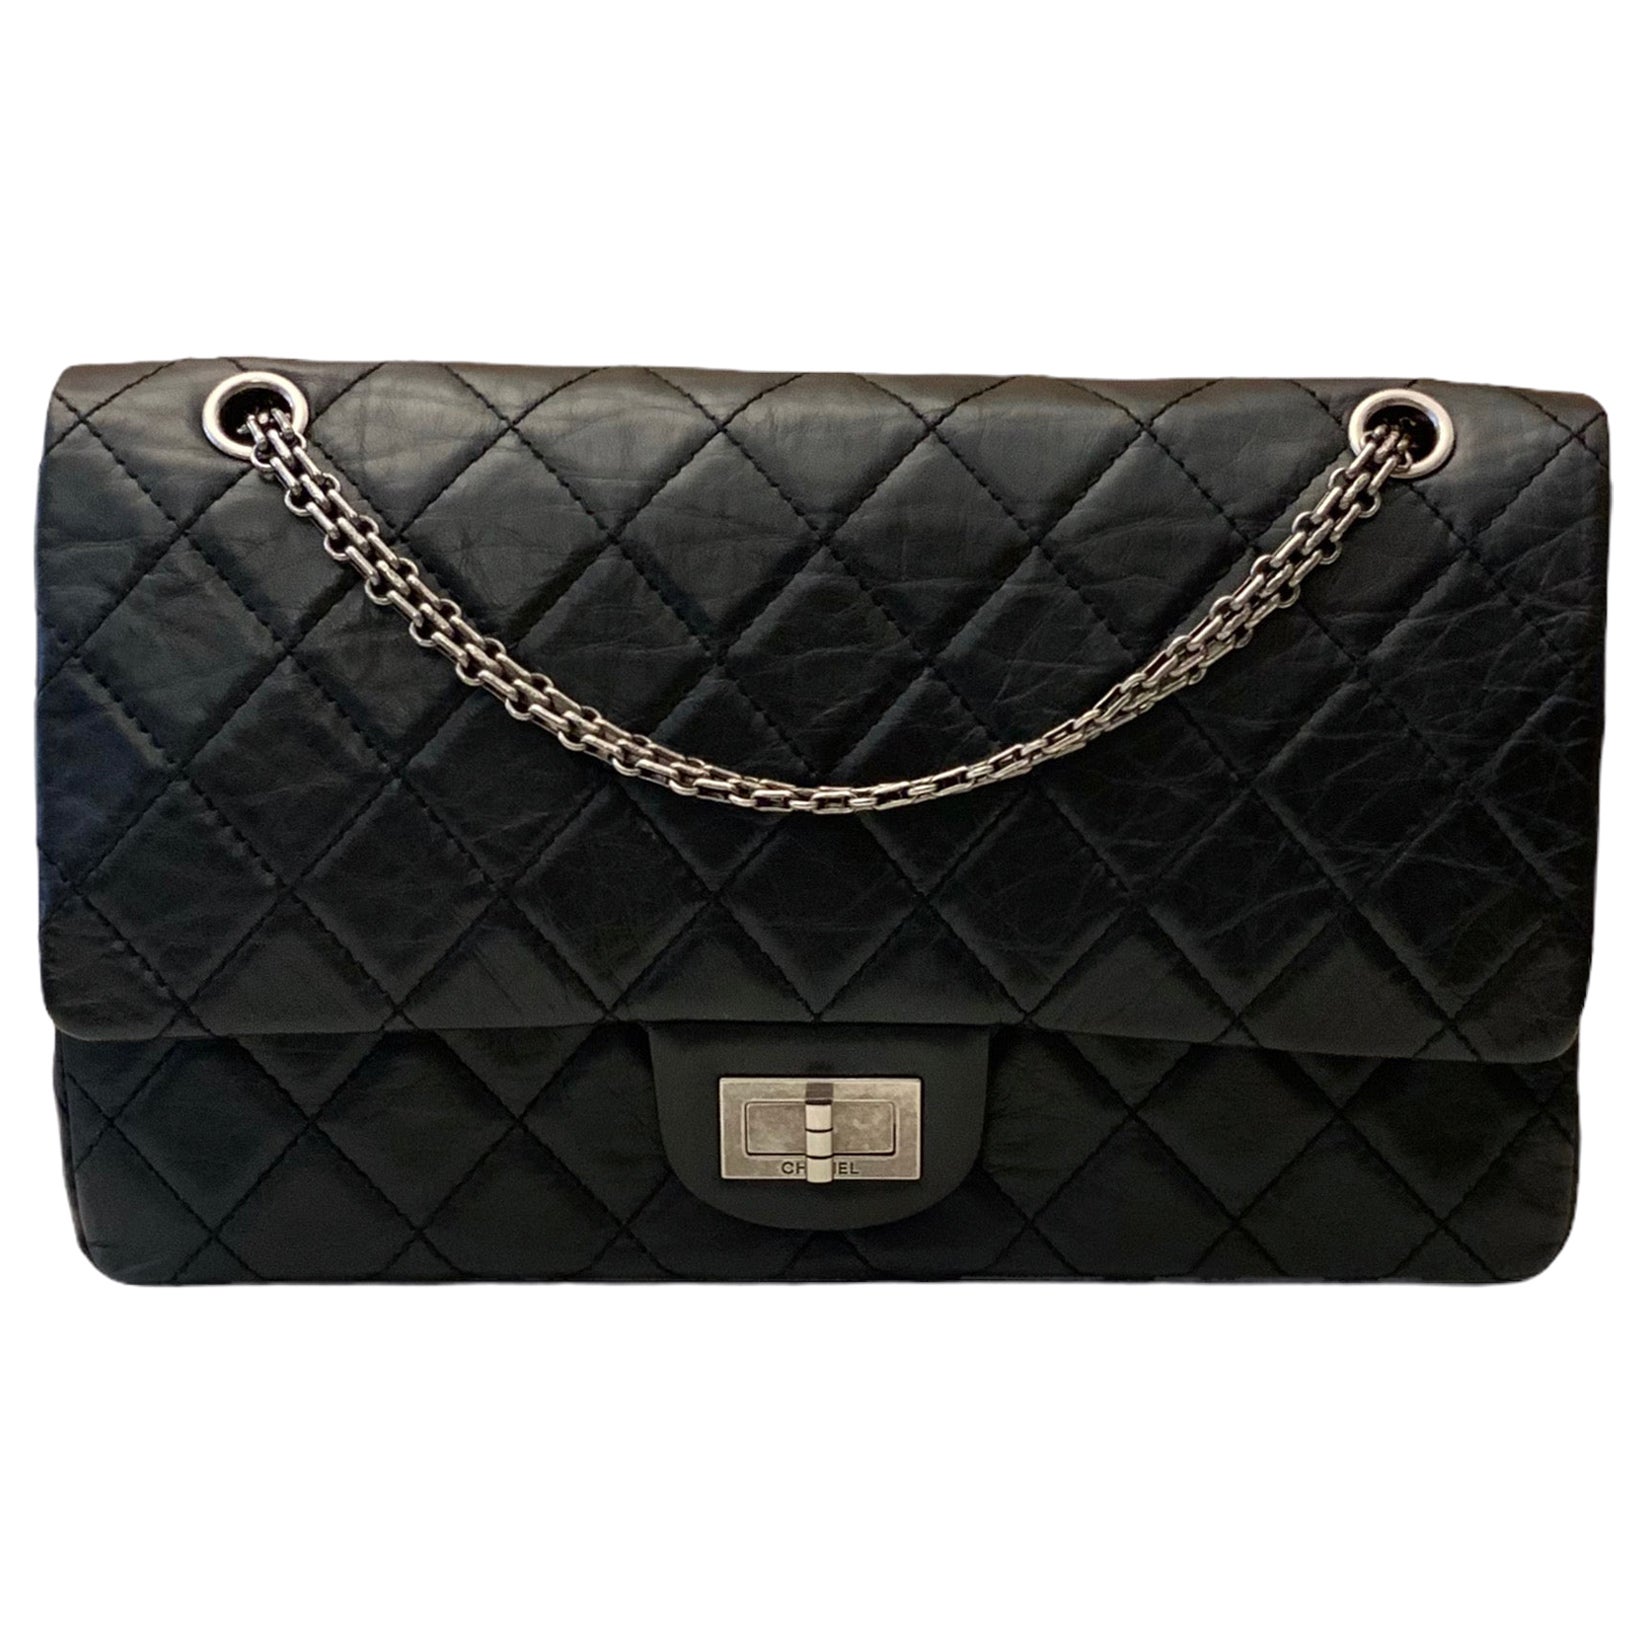 Chanel 2.55 Reissue Black Leather 227 Bag